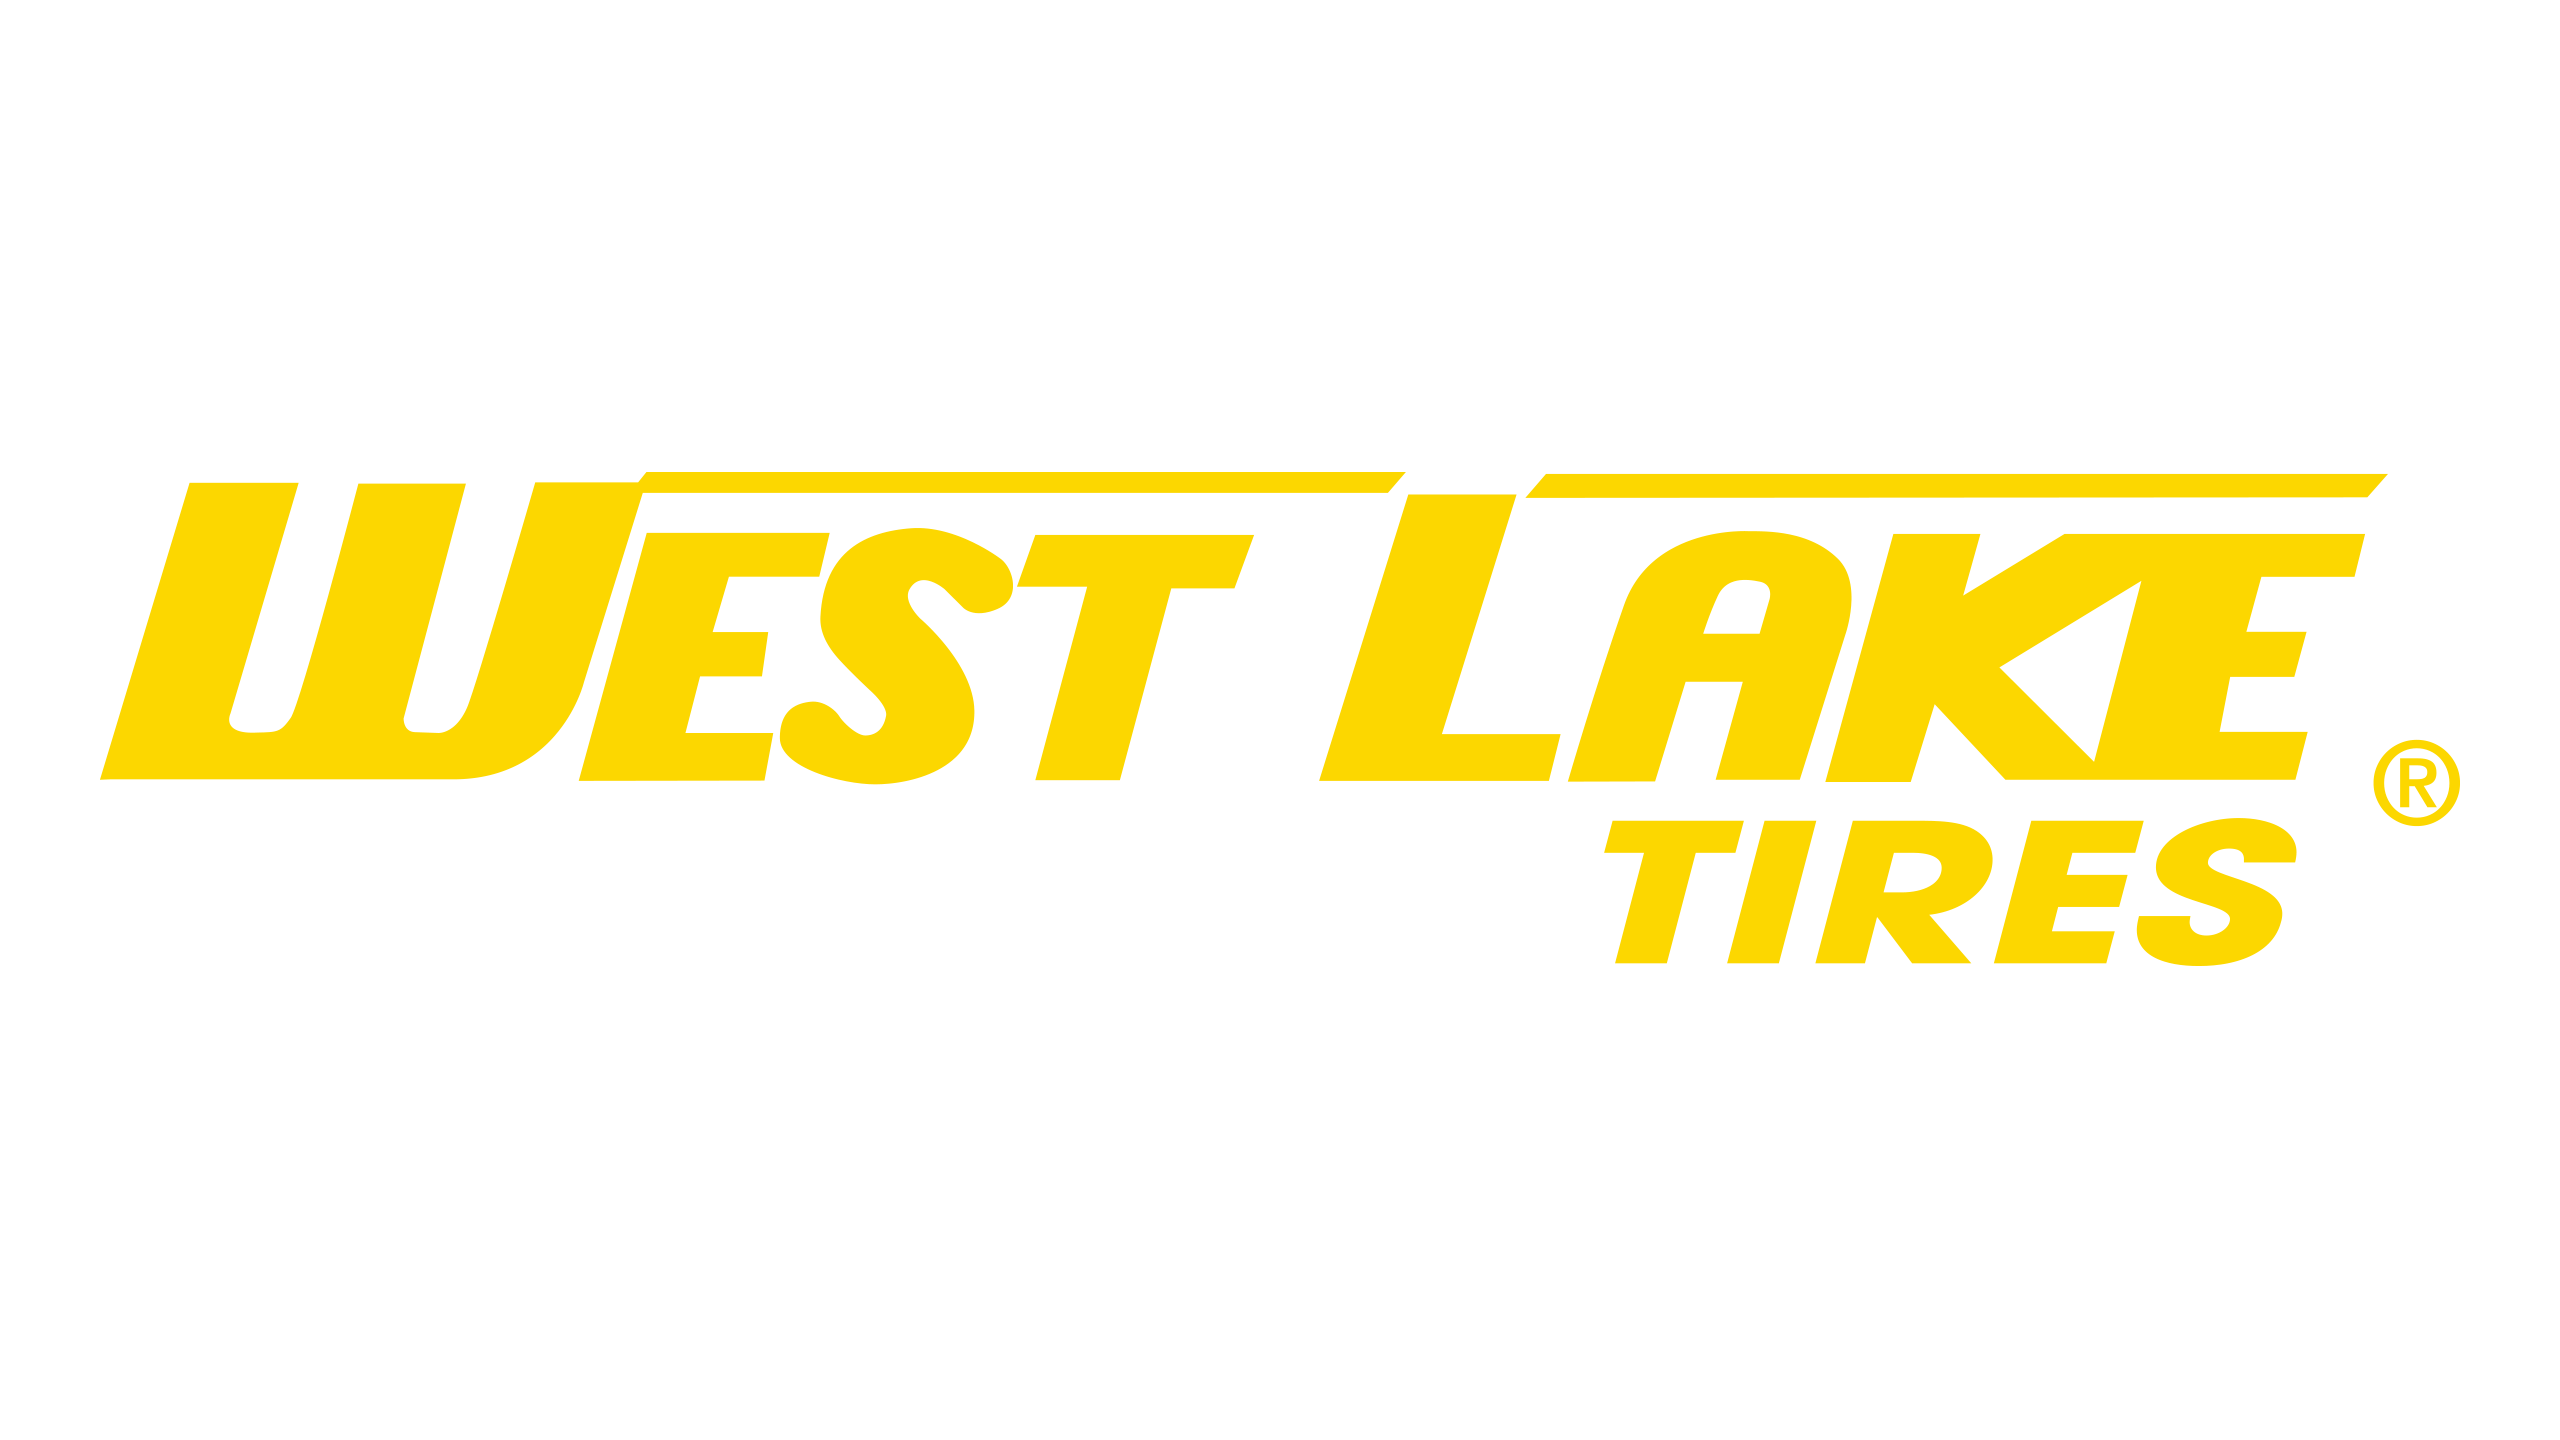 westlake tehergumi logo